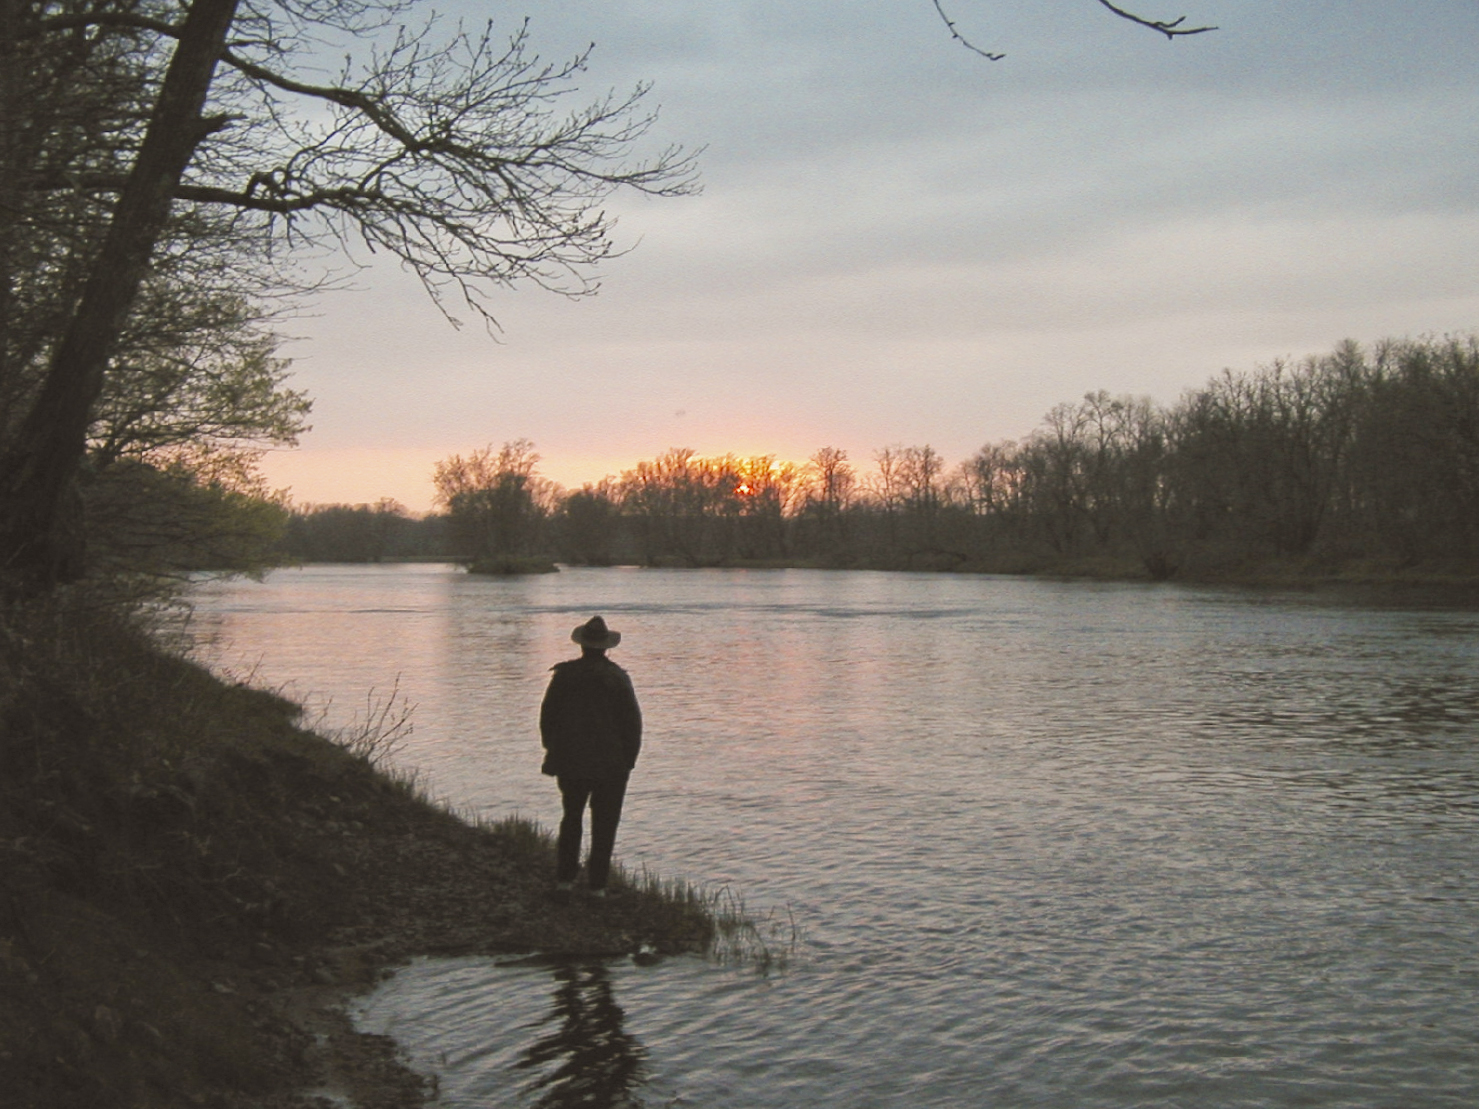 A man stands next to a river watching a sunset.